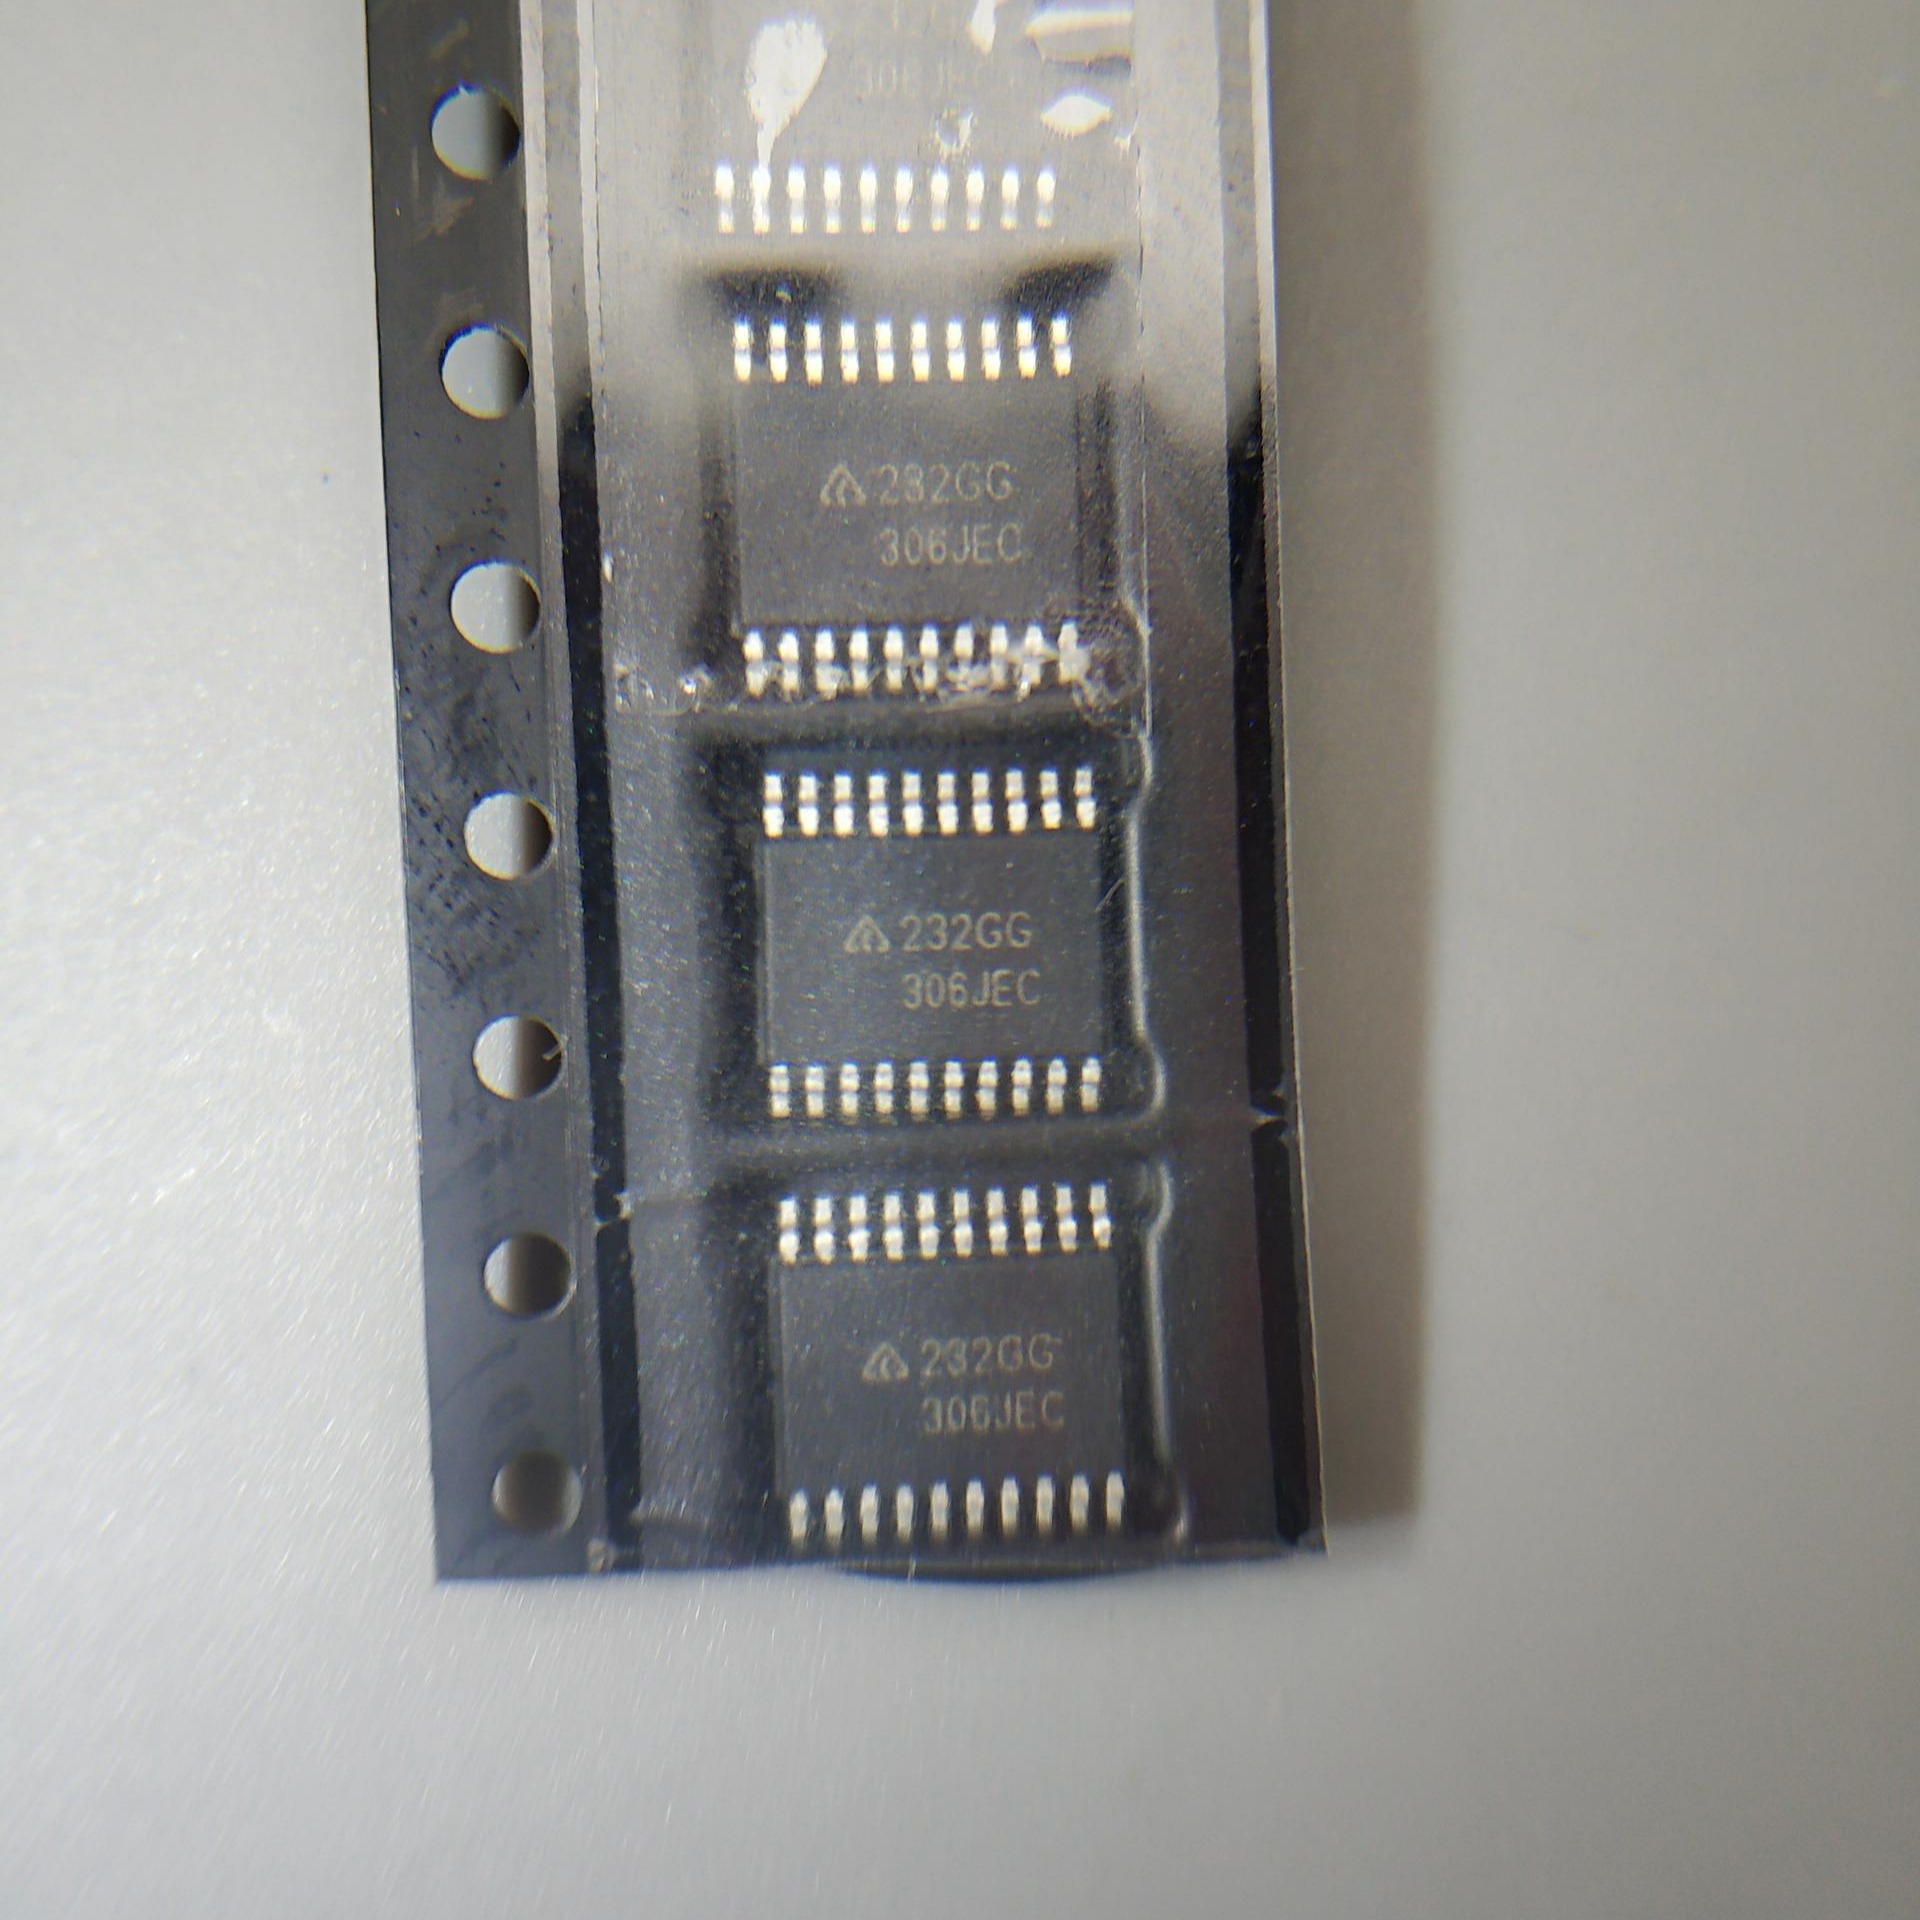 SF30BG 电源管理芯片  触摸芯片 单片机  放算IC专业代理商芯片  配单 经销与代理